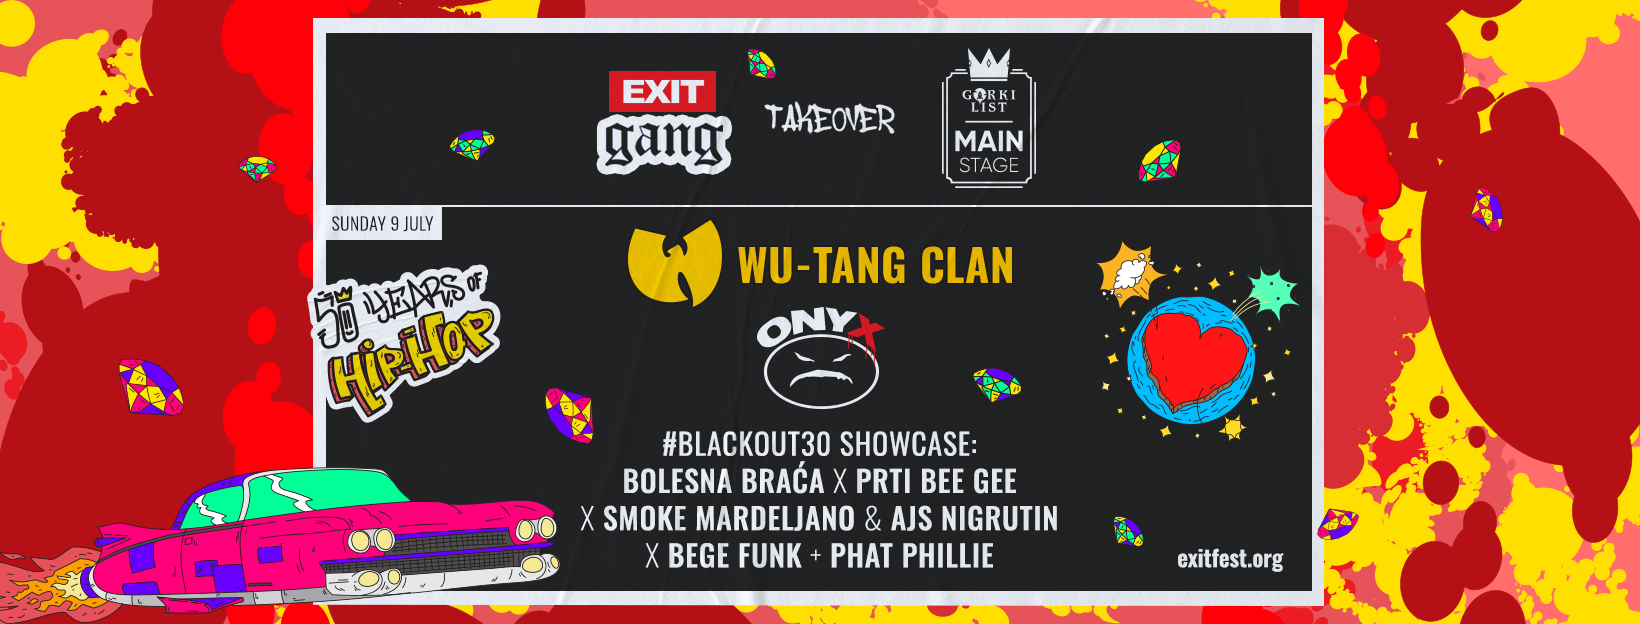 Onyx uz Wu-Tang predvode Exit Festival i Blackout30 Showcase!